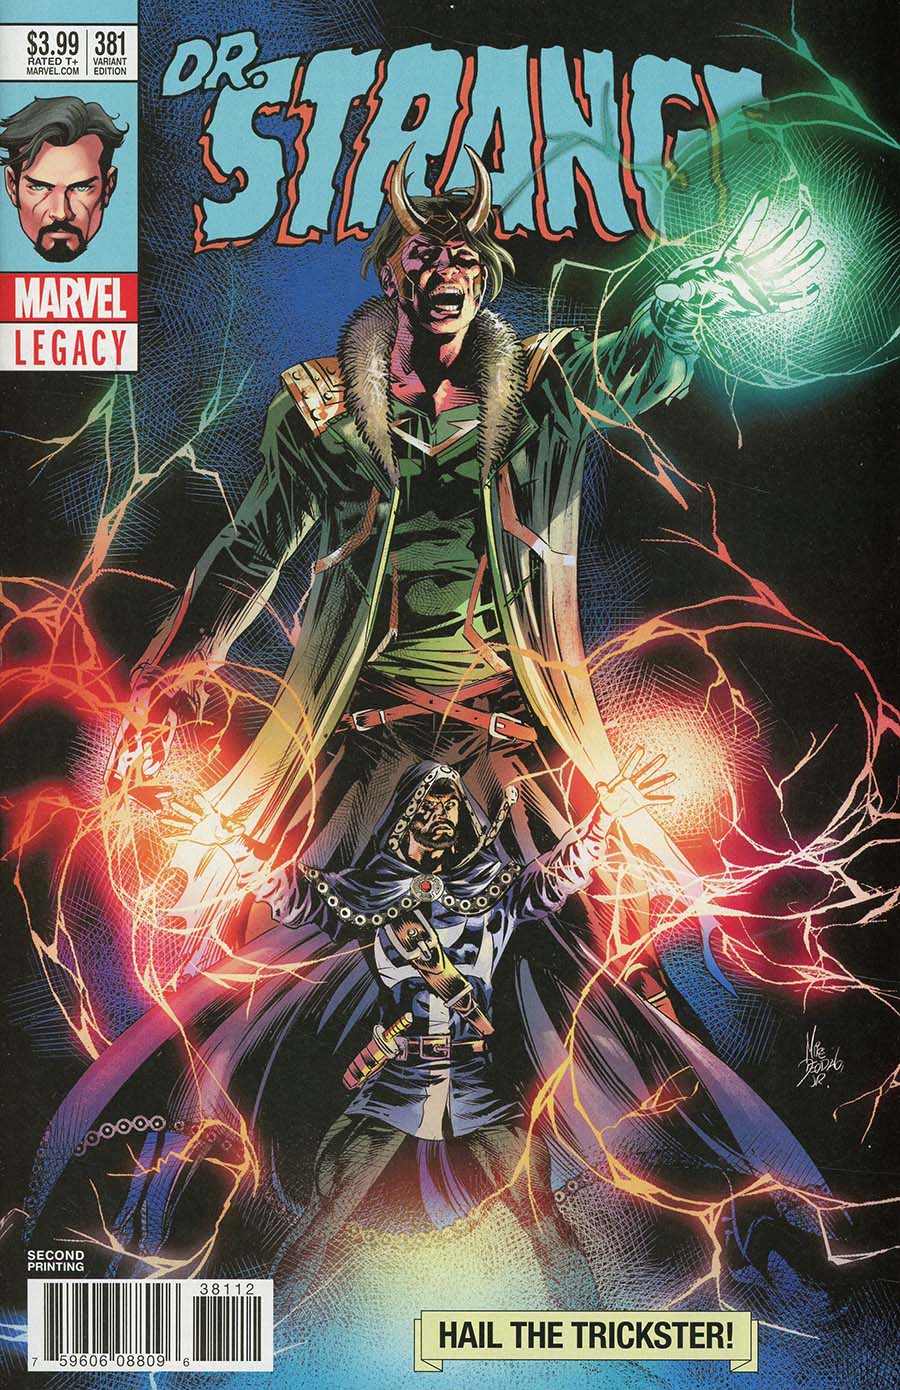 Doctor Strange Vol 4 #381 Cover G 2nd Ptg Variant Mike Deodato Jr Cover (Marvel Legacy Tie-In)